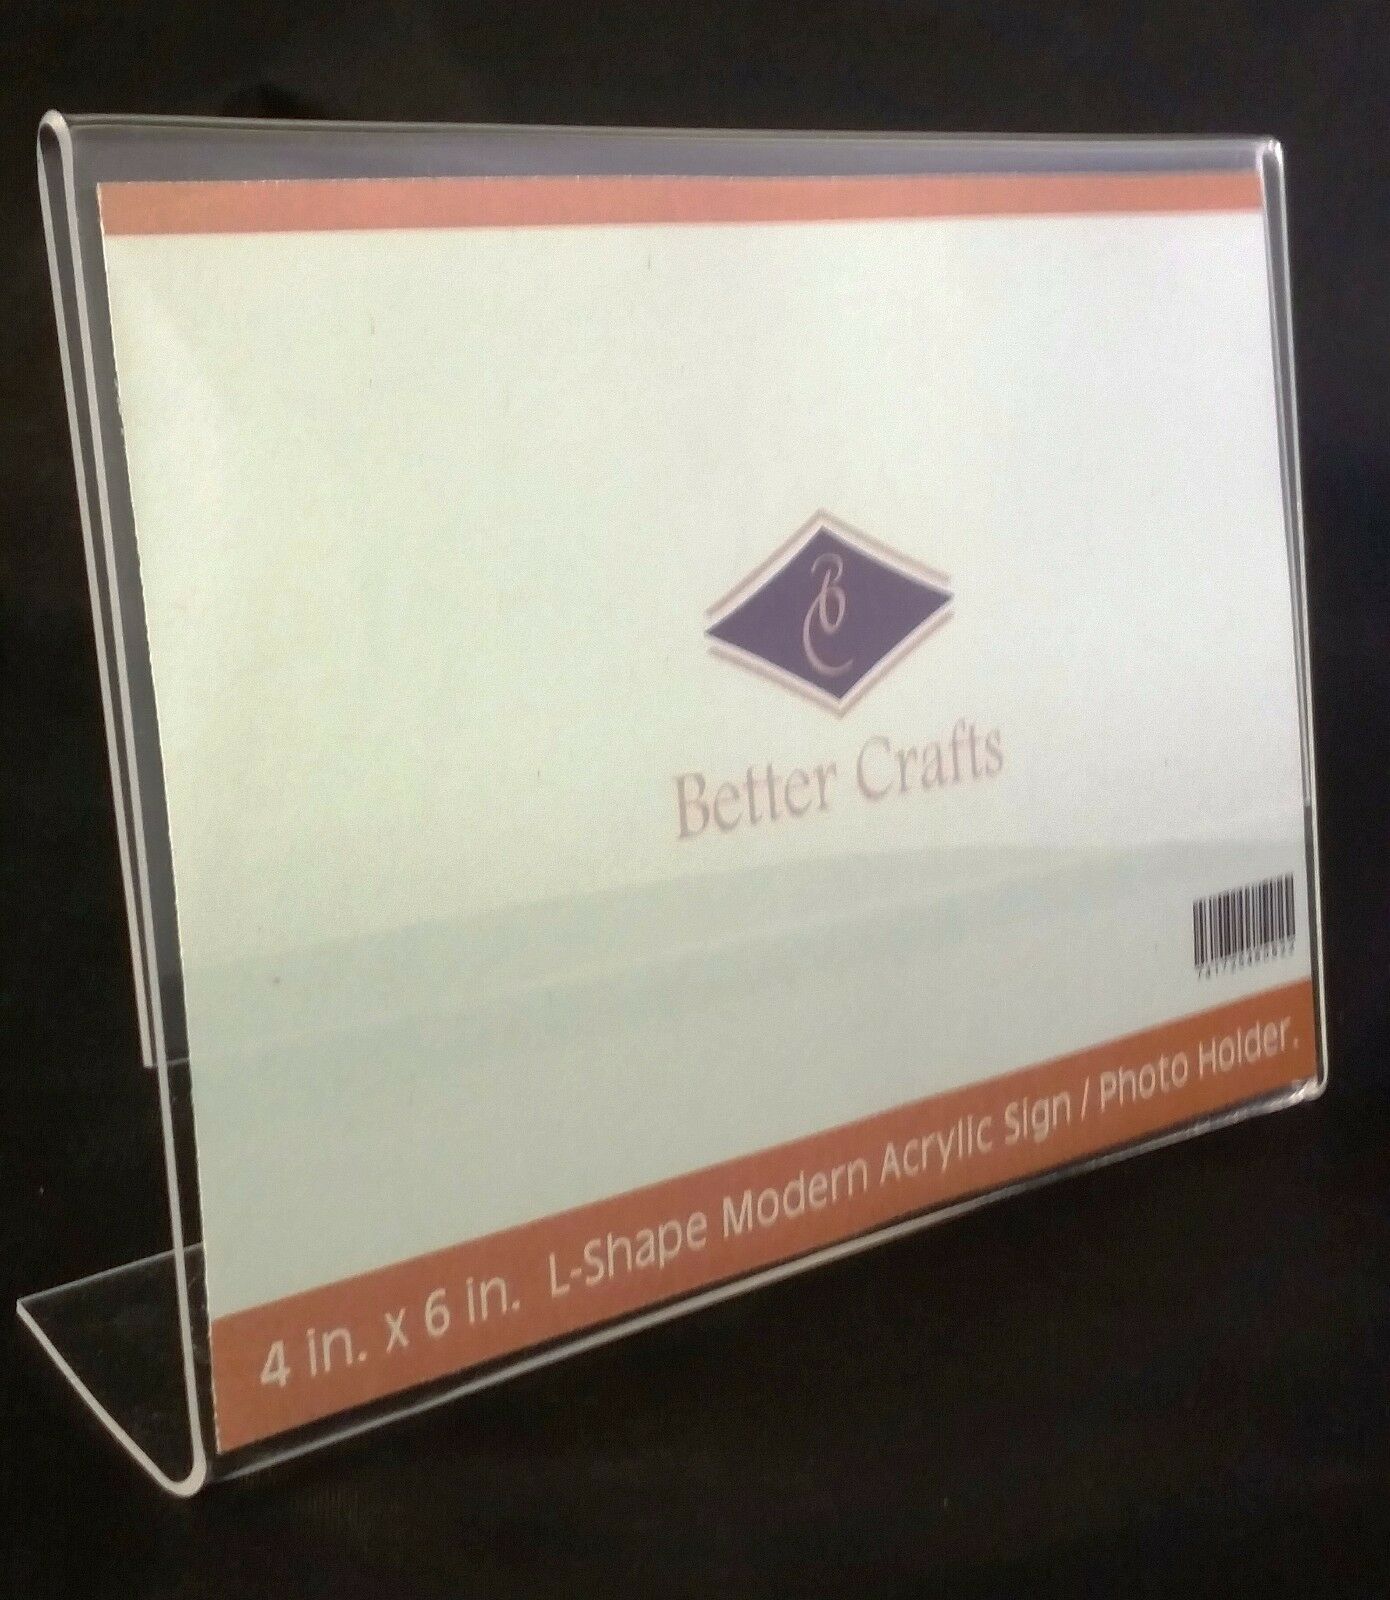 Better Crafts Horizontal Slanted L-shape Acrylic Sign Holder - 2 Pack.